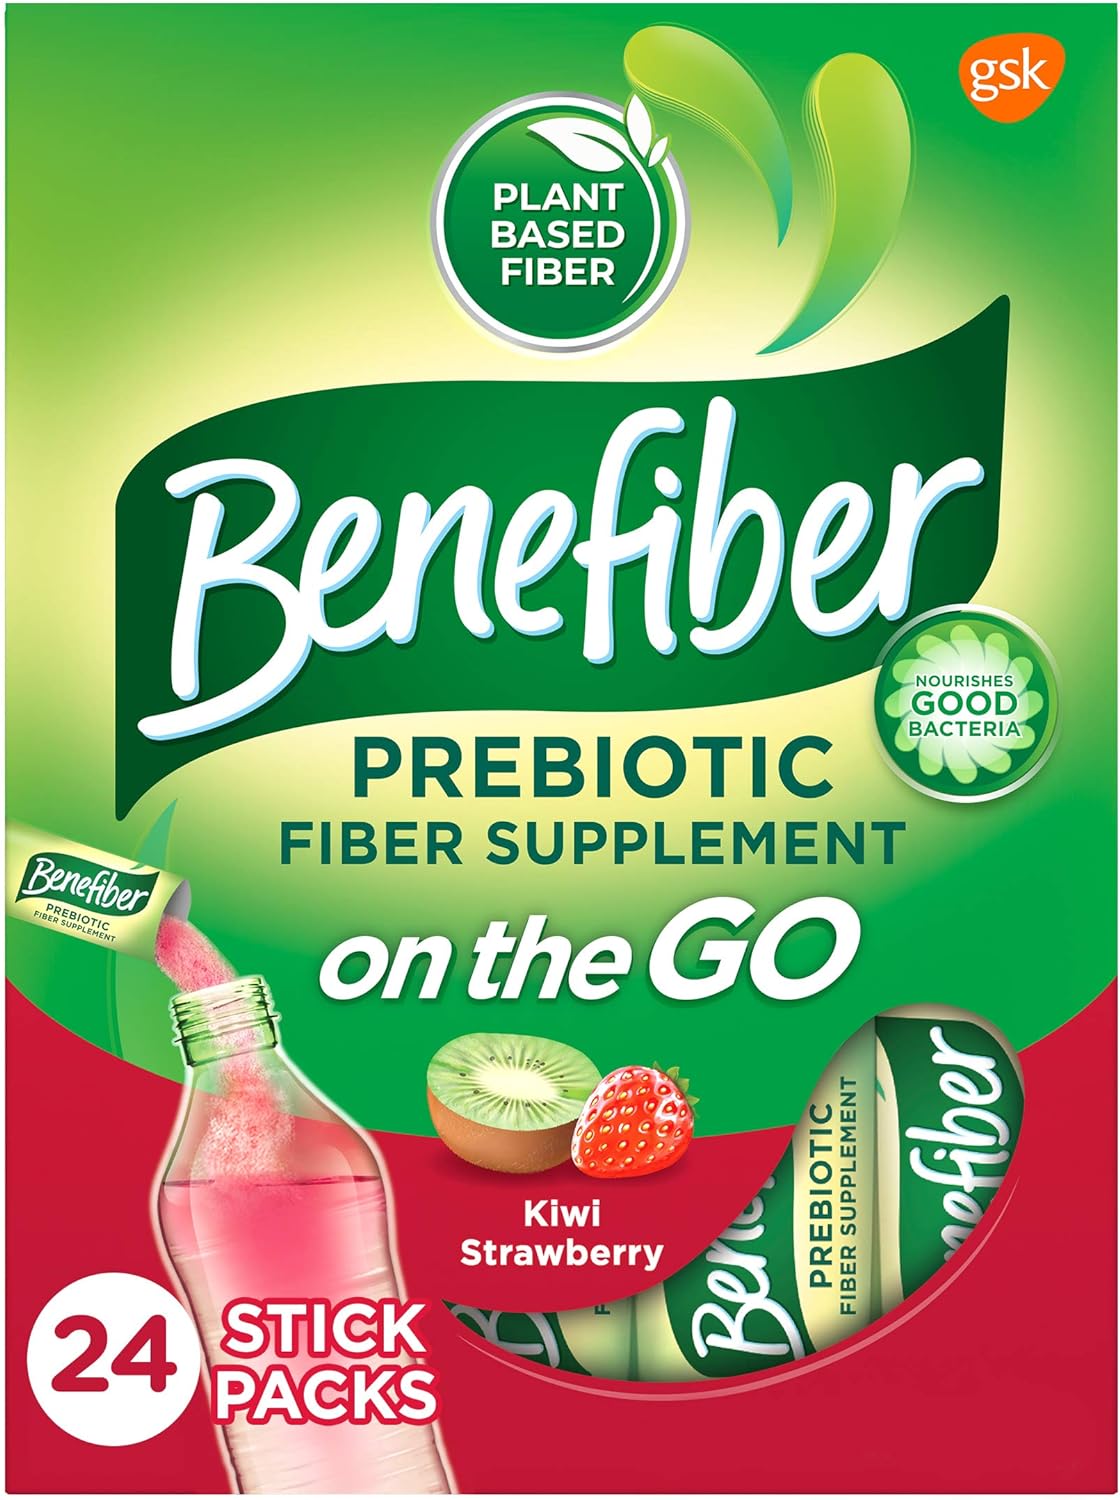 Benefiber On the Go Prebiotic Fiber Supplement Powder for Digestive Health, Daily Fiber Powder, Kiwi Strawberry avor Powder Stick Packs - 24 Sticks (5.28 s)